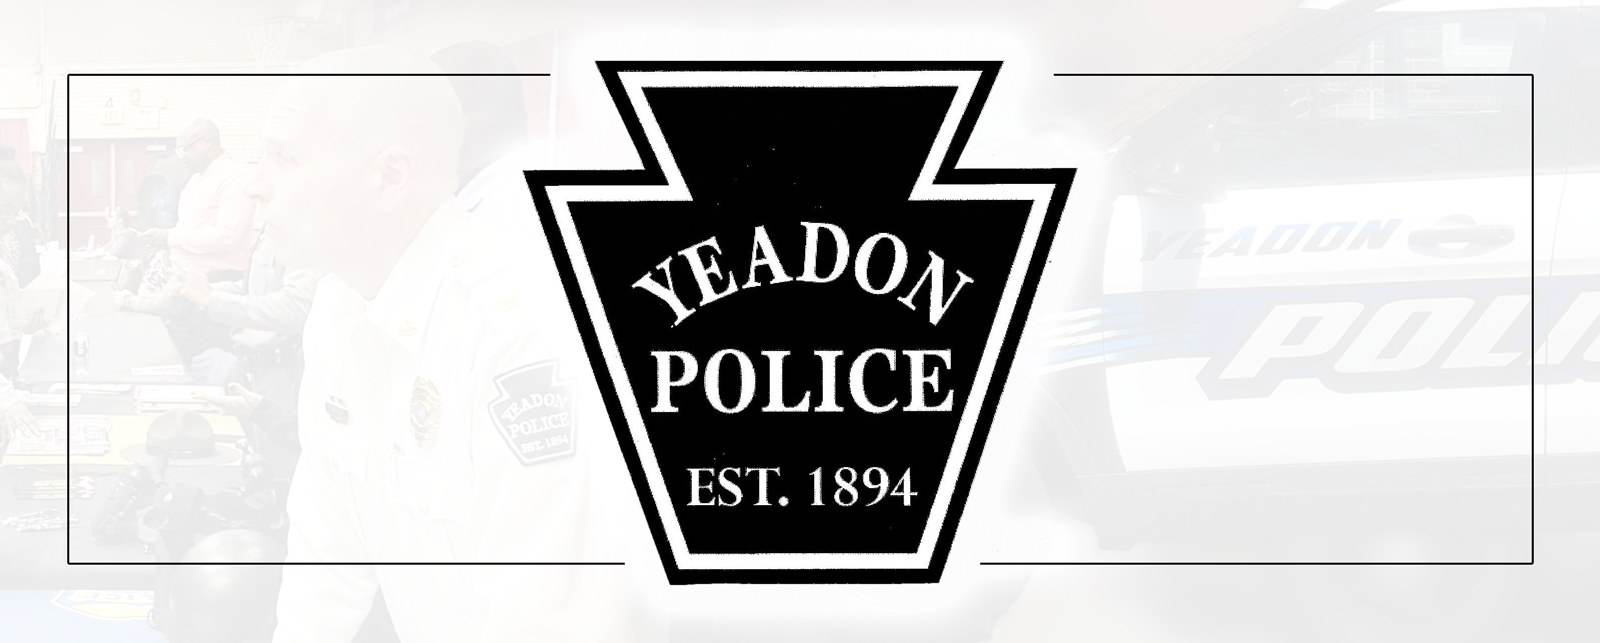 Yeadon Borough Police Department